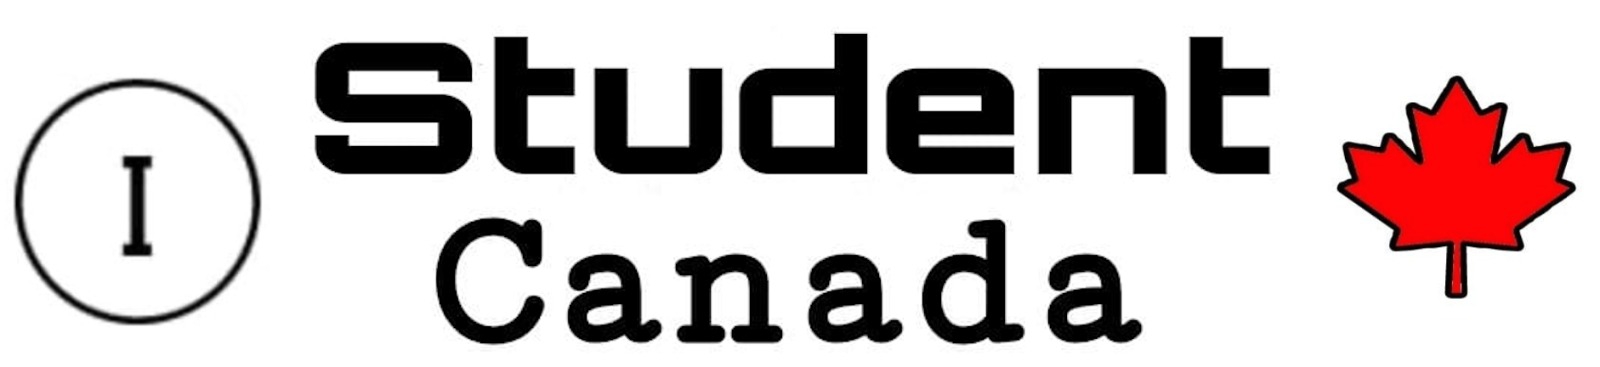 I Student Canada Logo